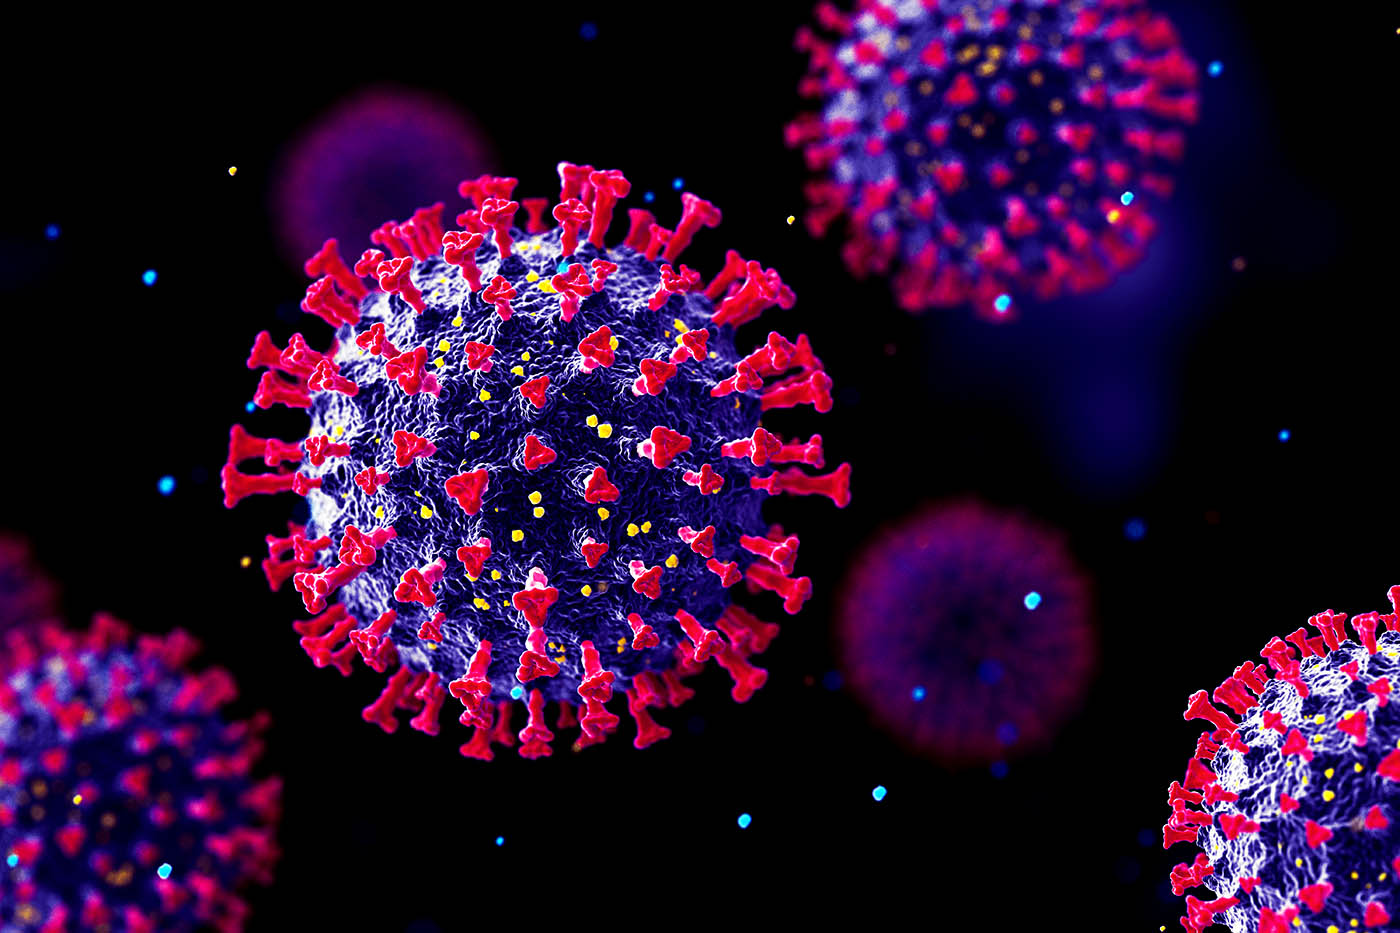 3D rendering of the COVID19 virus